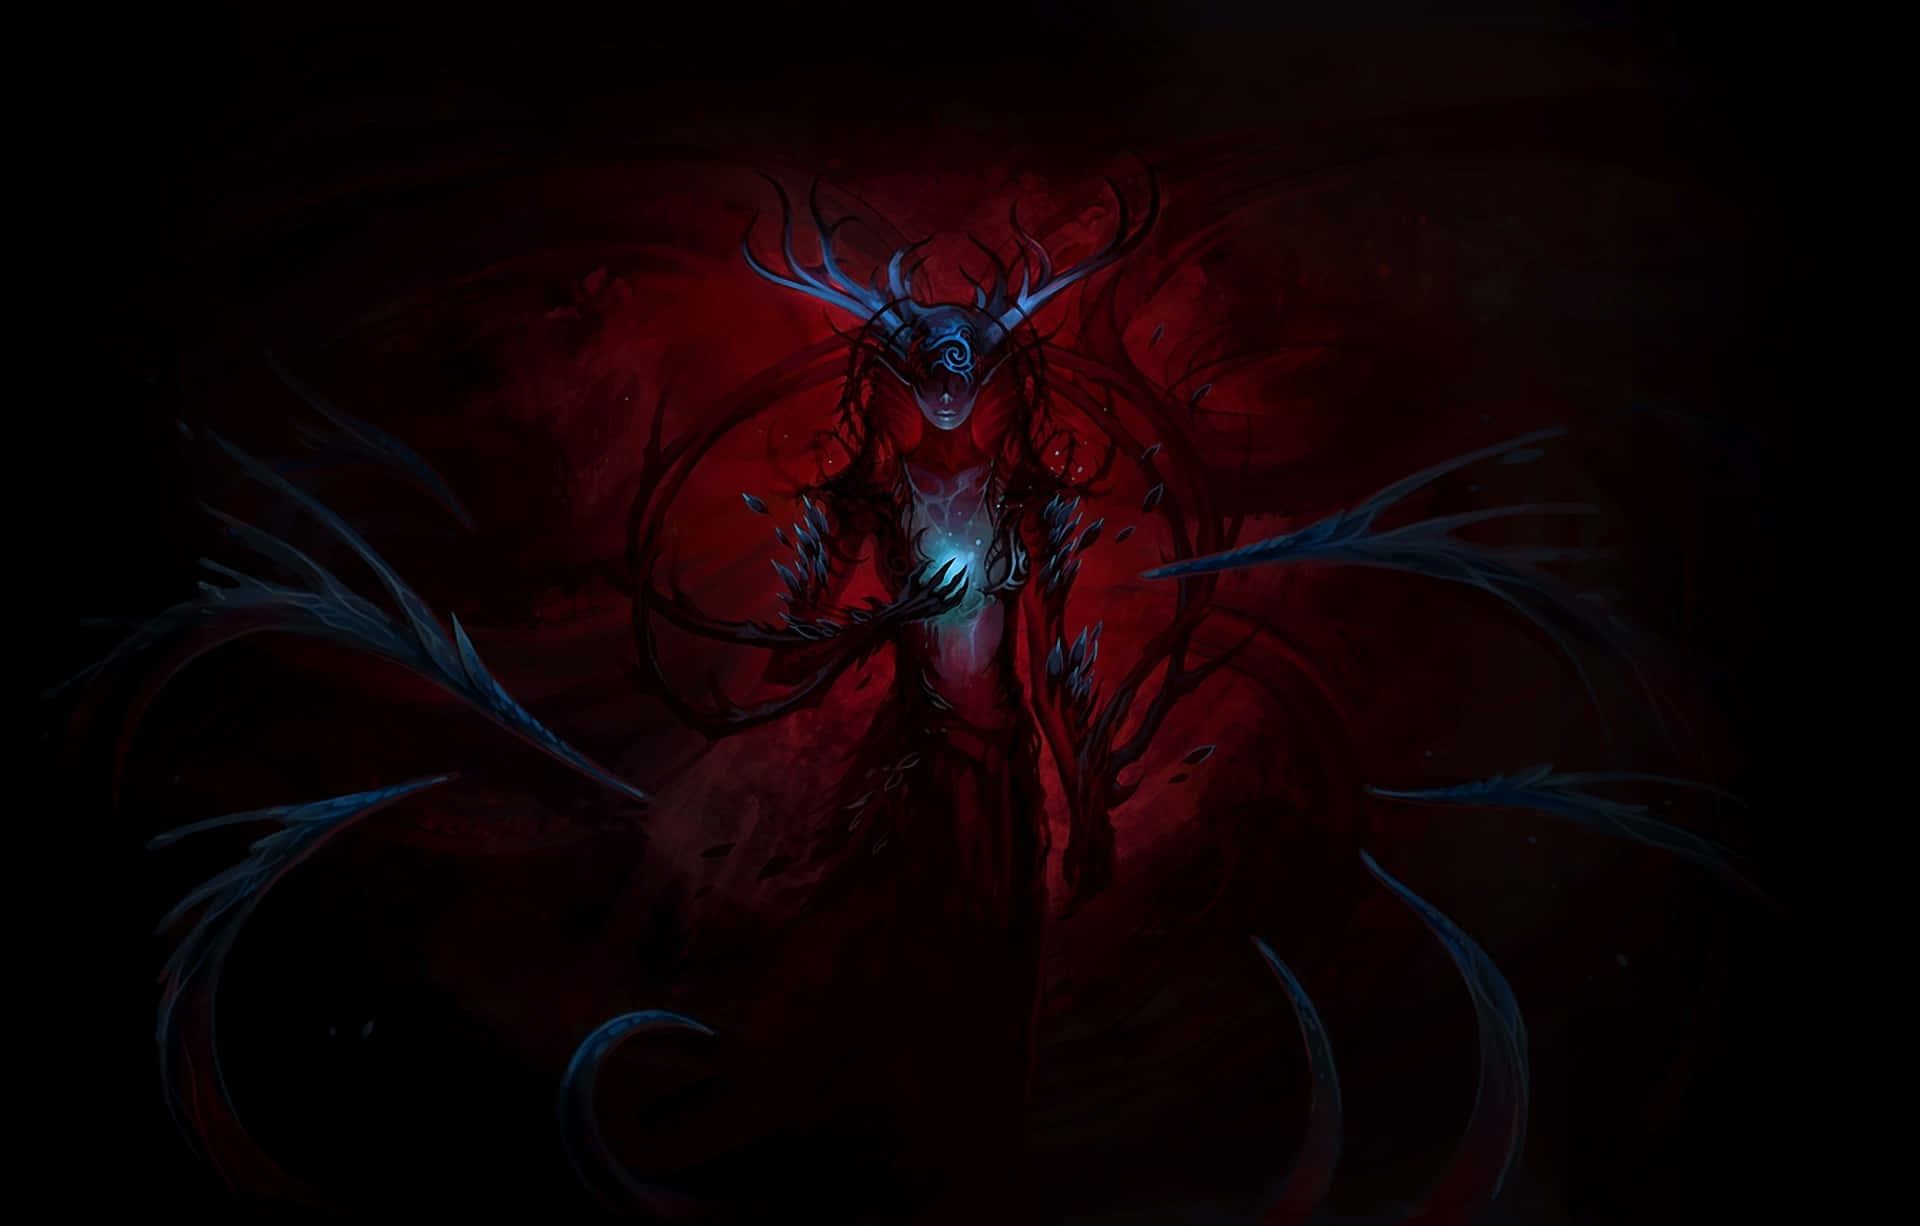 "The Devil Within - A Sinister Girl Summoning Dark Magic" Wallpaper